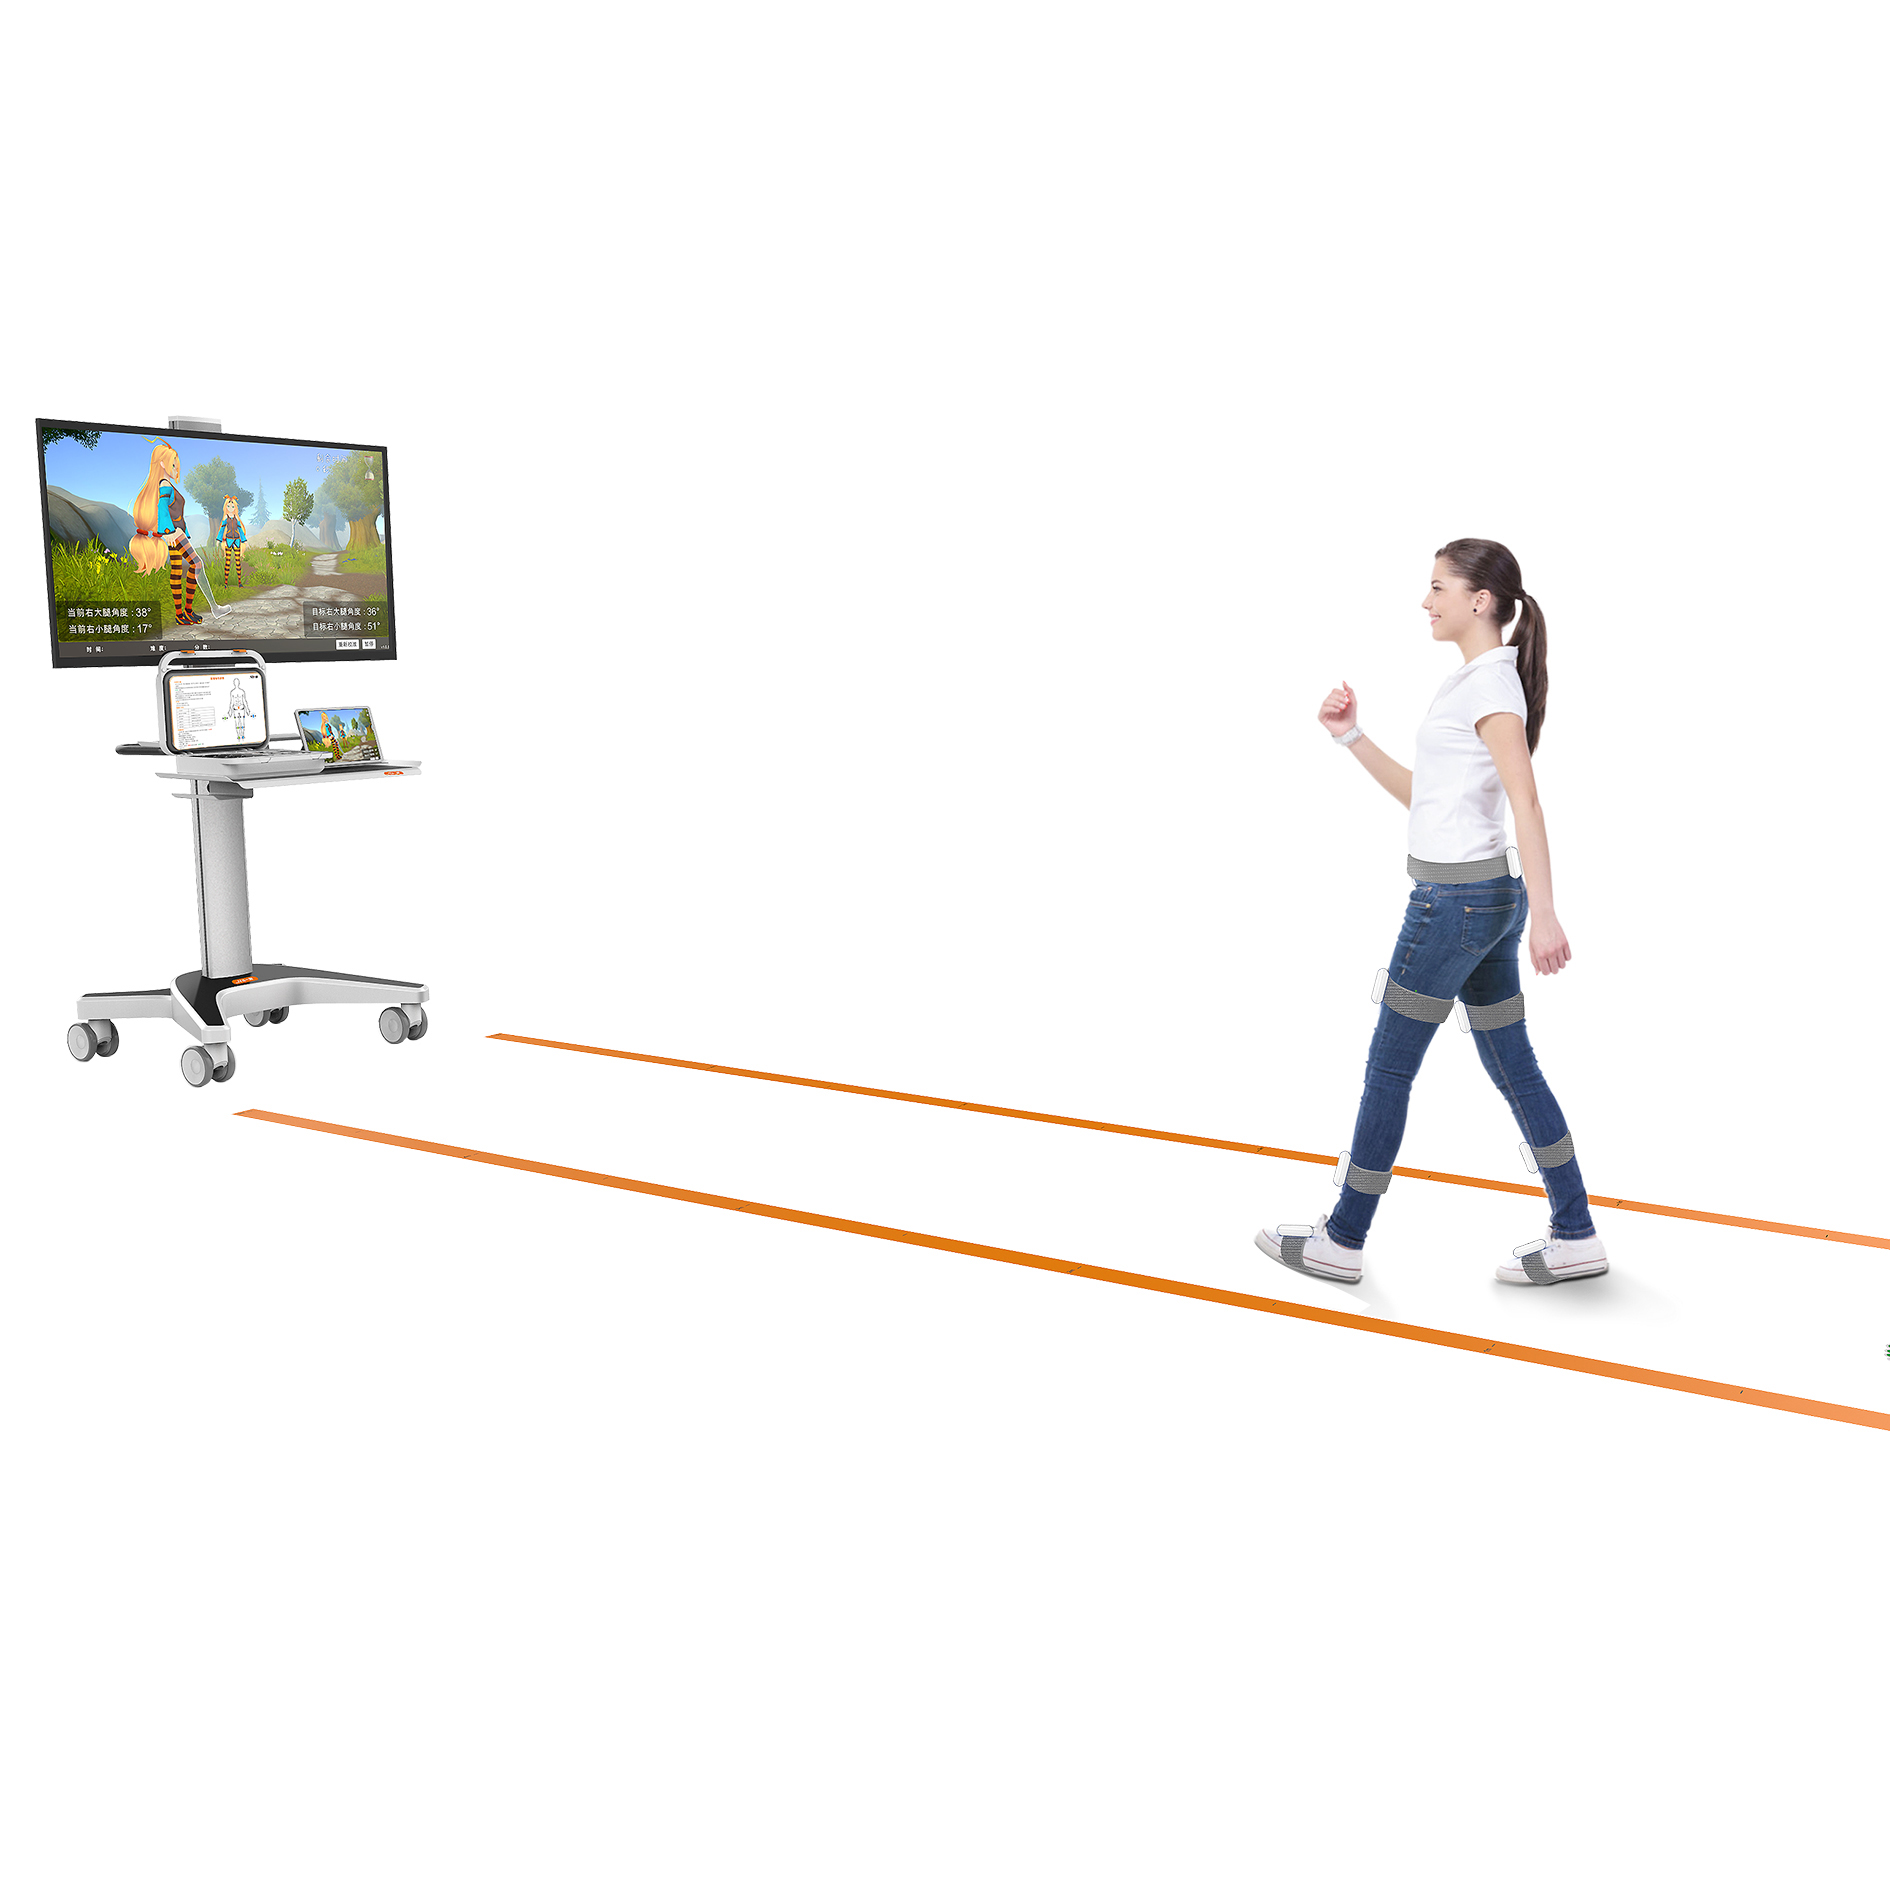 posture assessment gait rehabilitation equipment assessment Portable Wireless gait analysis Equipment device Featured Image